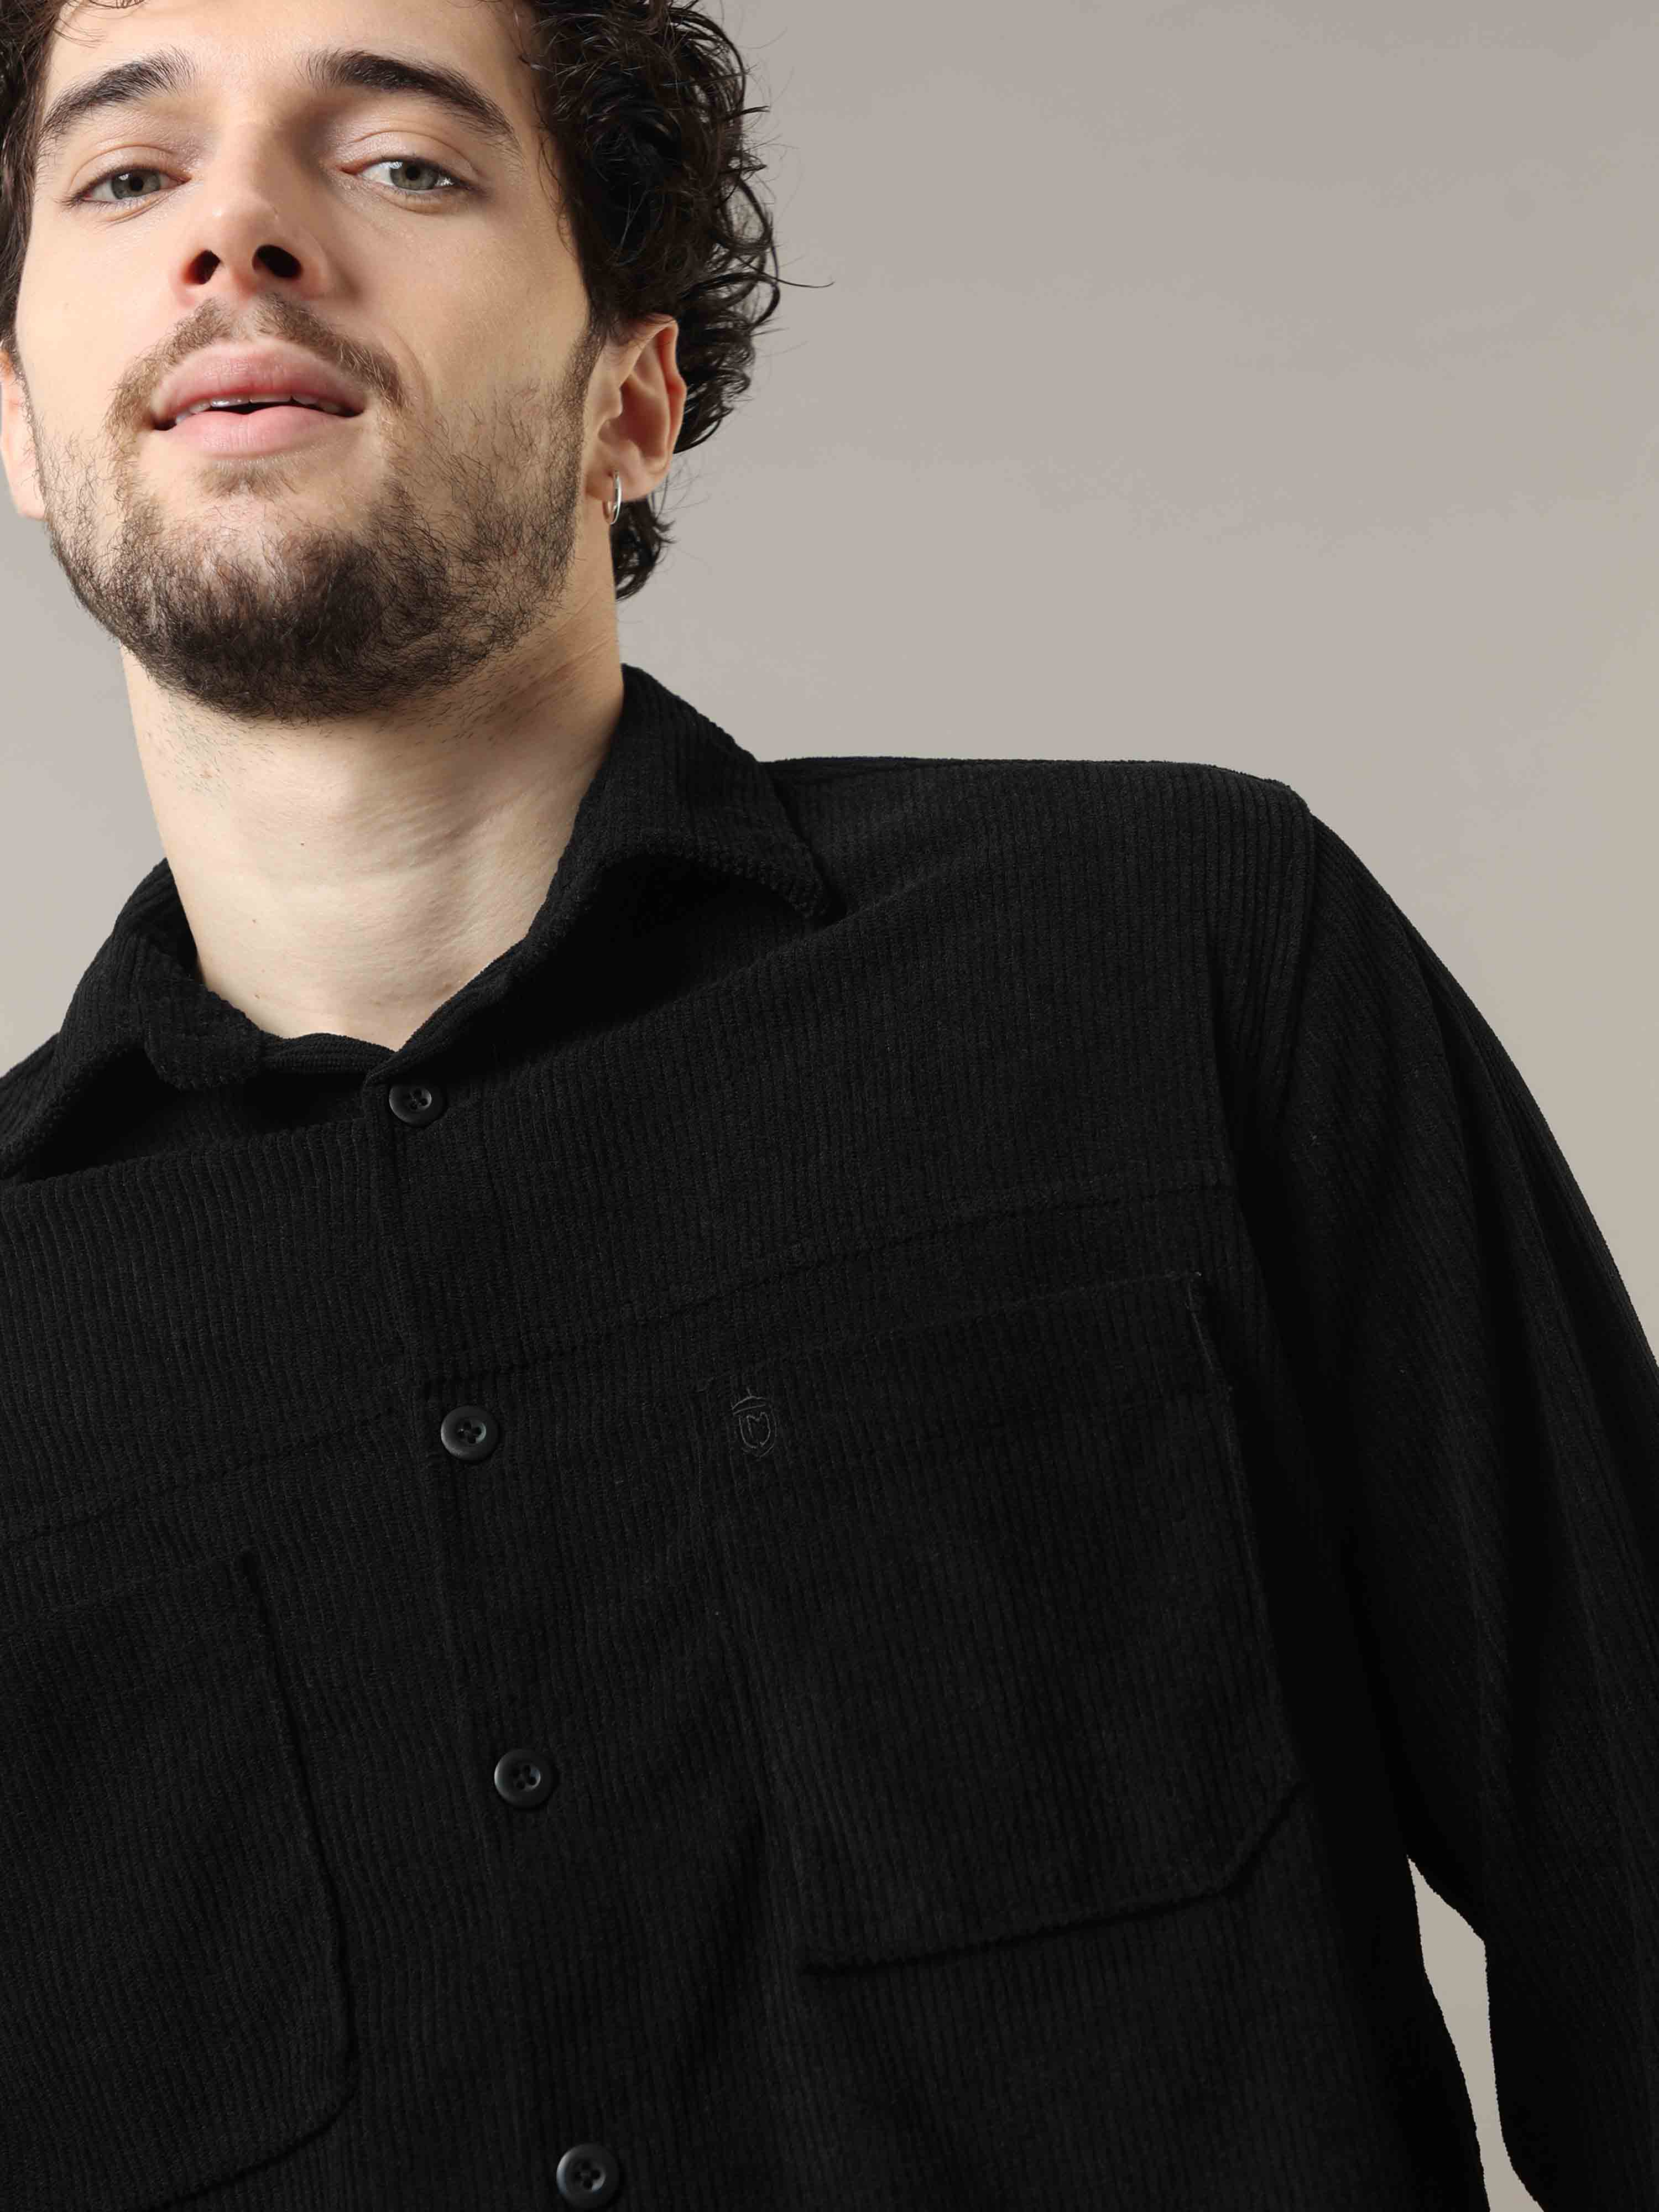 Buy Trendy Black Corduroy Shirt Mens Online at Great PriceRs. 1499.00